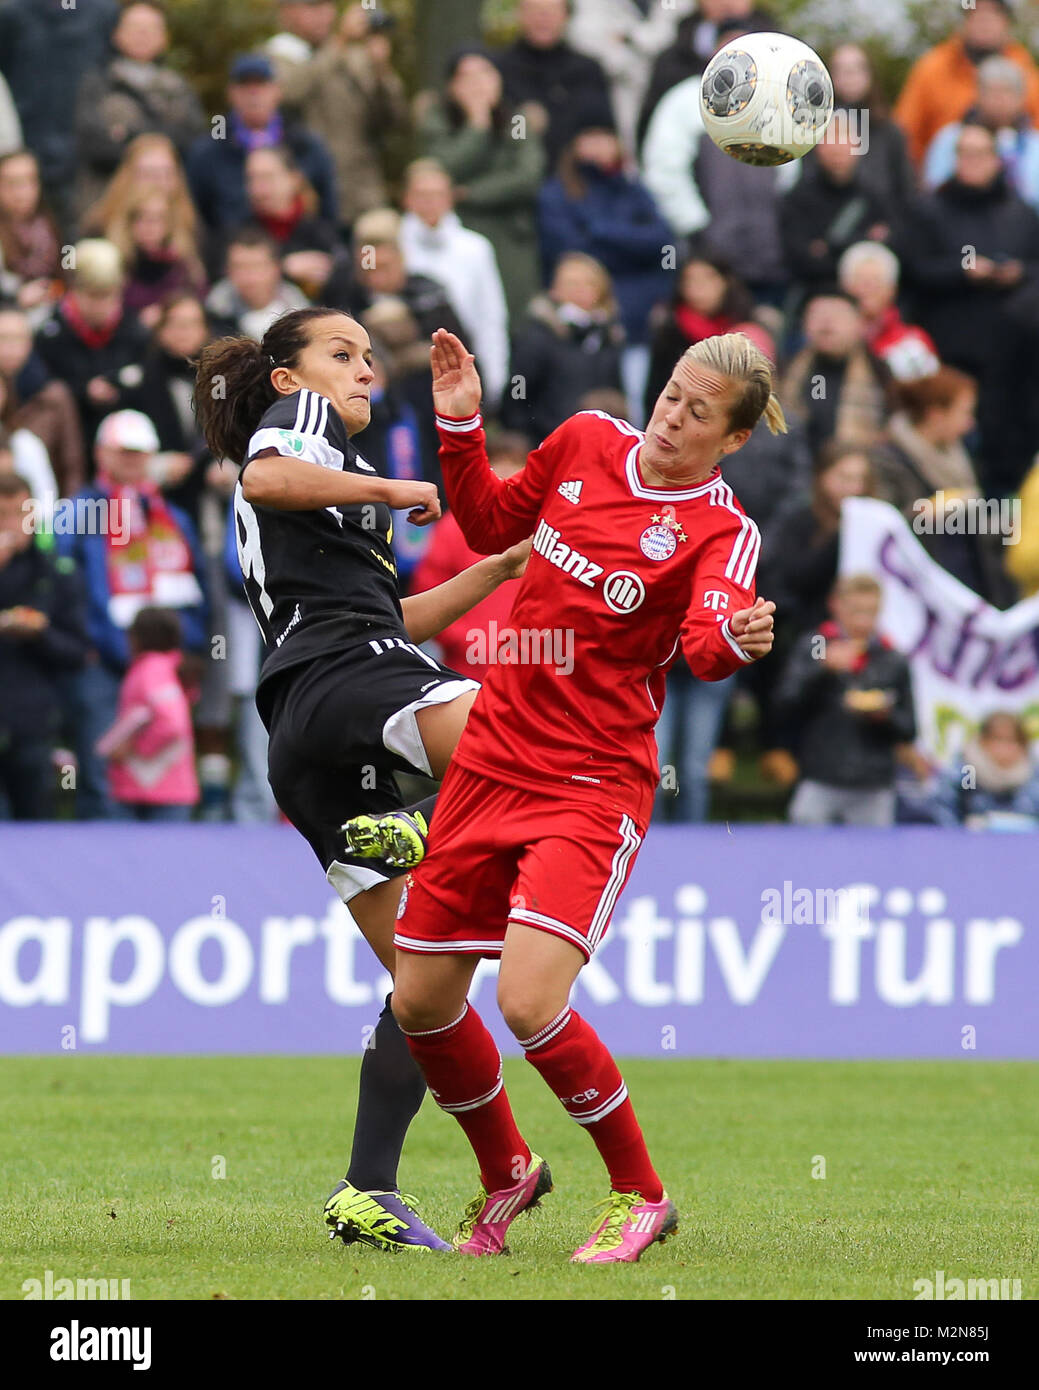 von links: Lira Bajramaj (1. FFC Frankfurt) und Vanessa Bürki (FC Bayern München) Stock Photo